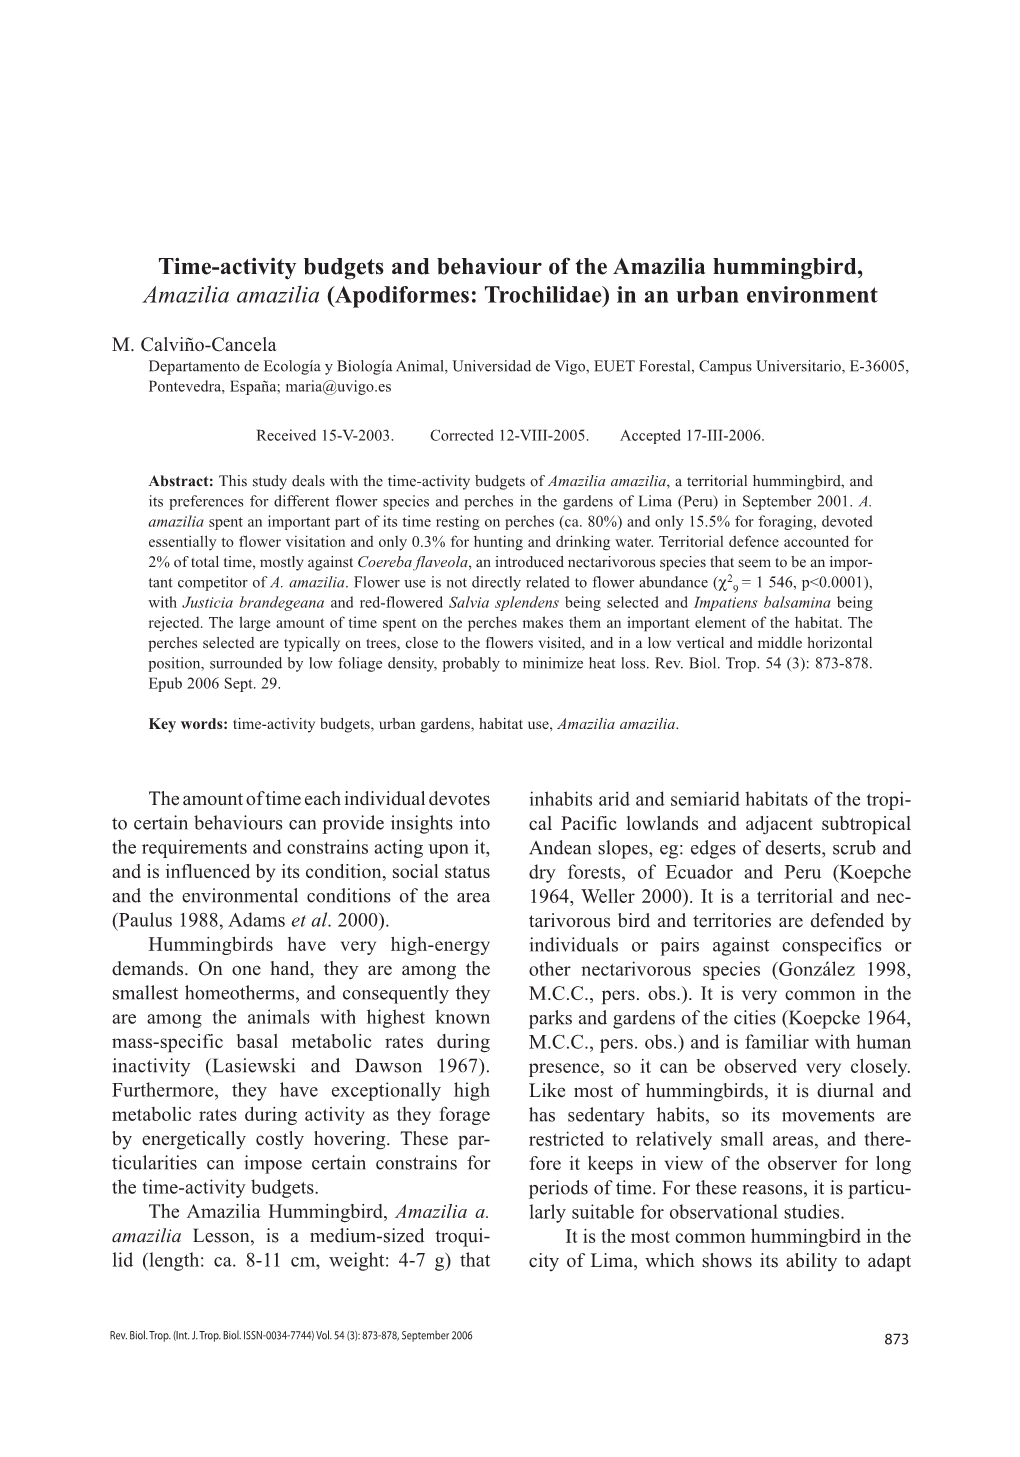 Time-Activity Budgets and Behaviour of the Amazilia Hummingbird, Amazilia Amazilia (Apodiformes: Trochilidae) in an Urban Environment